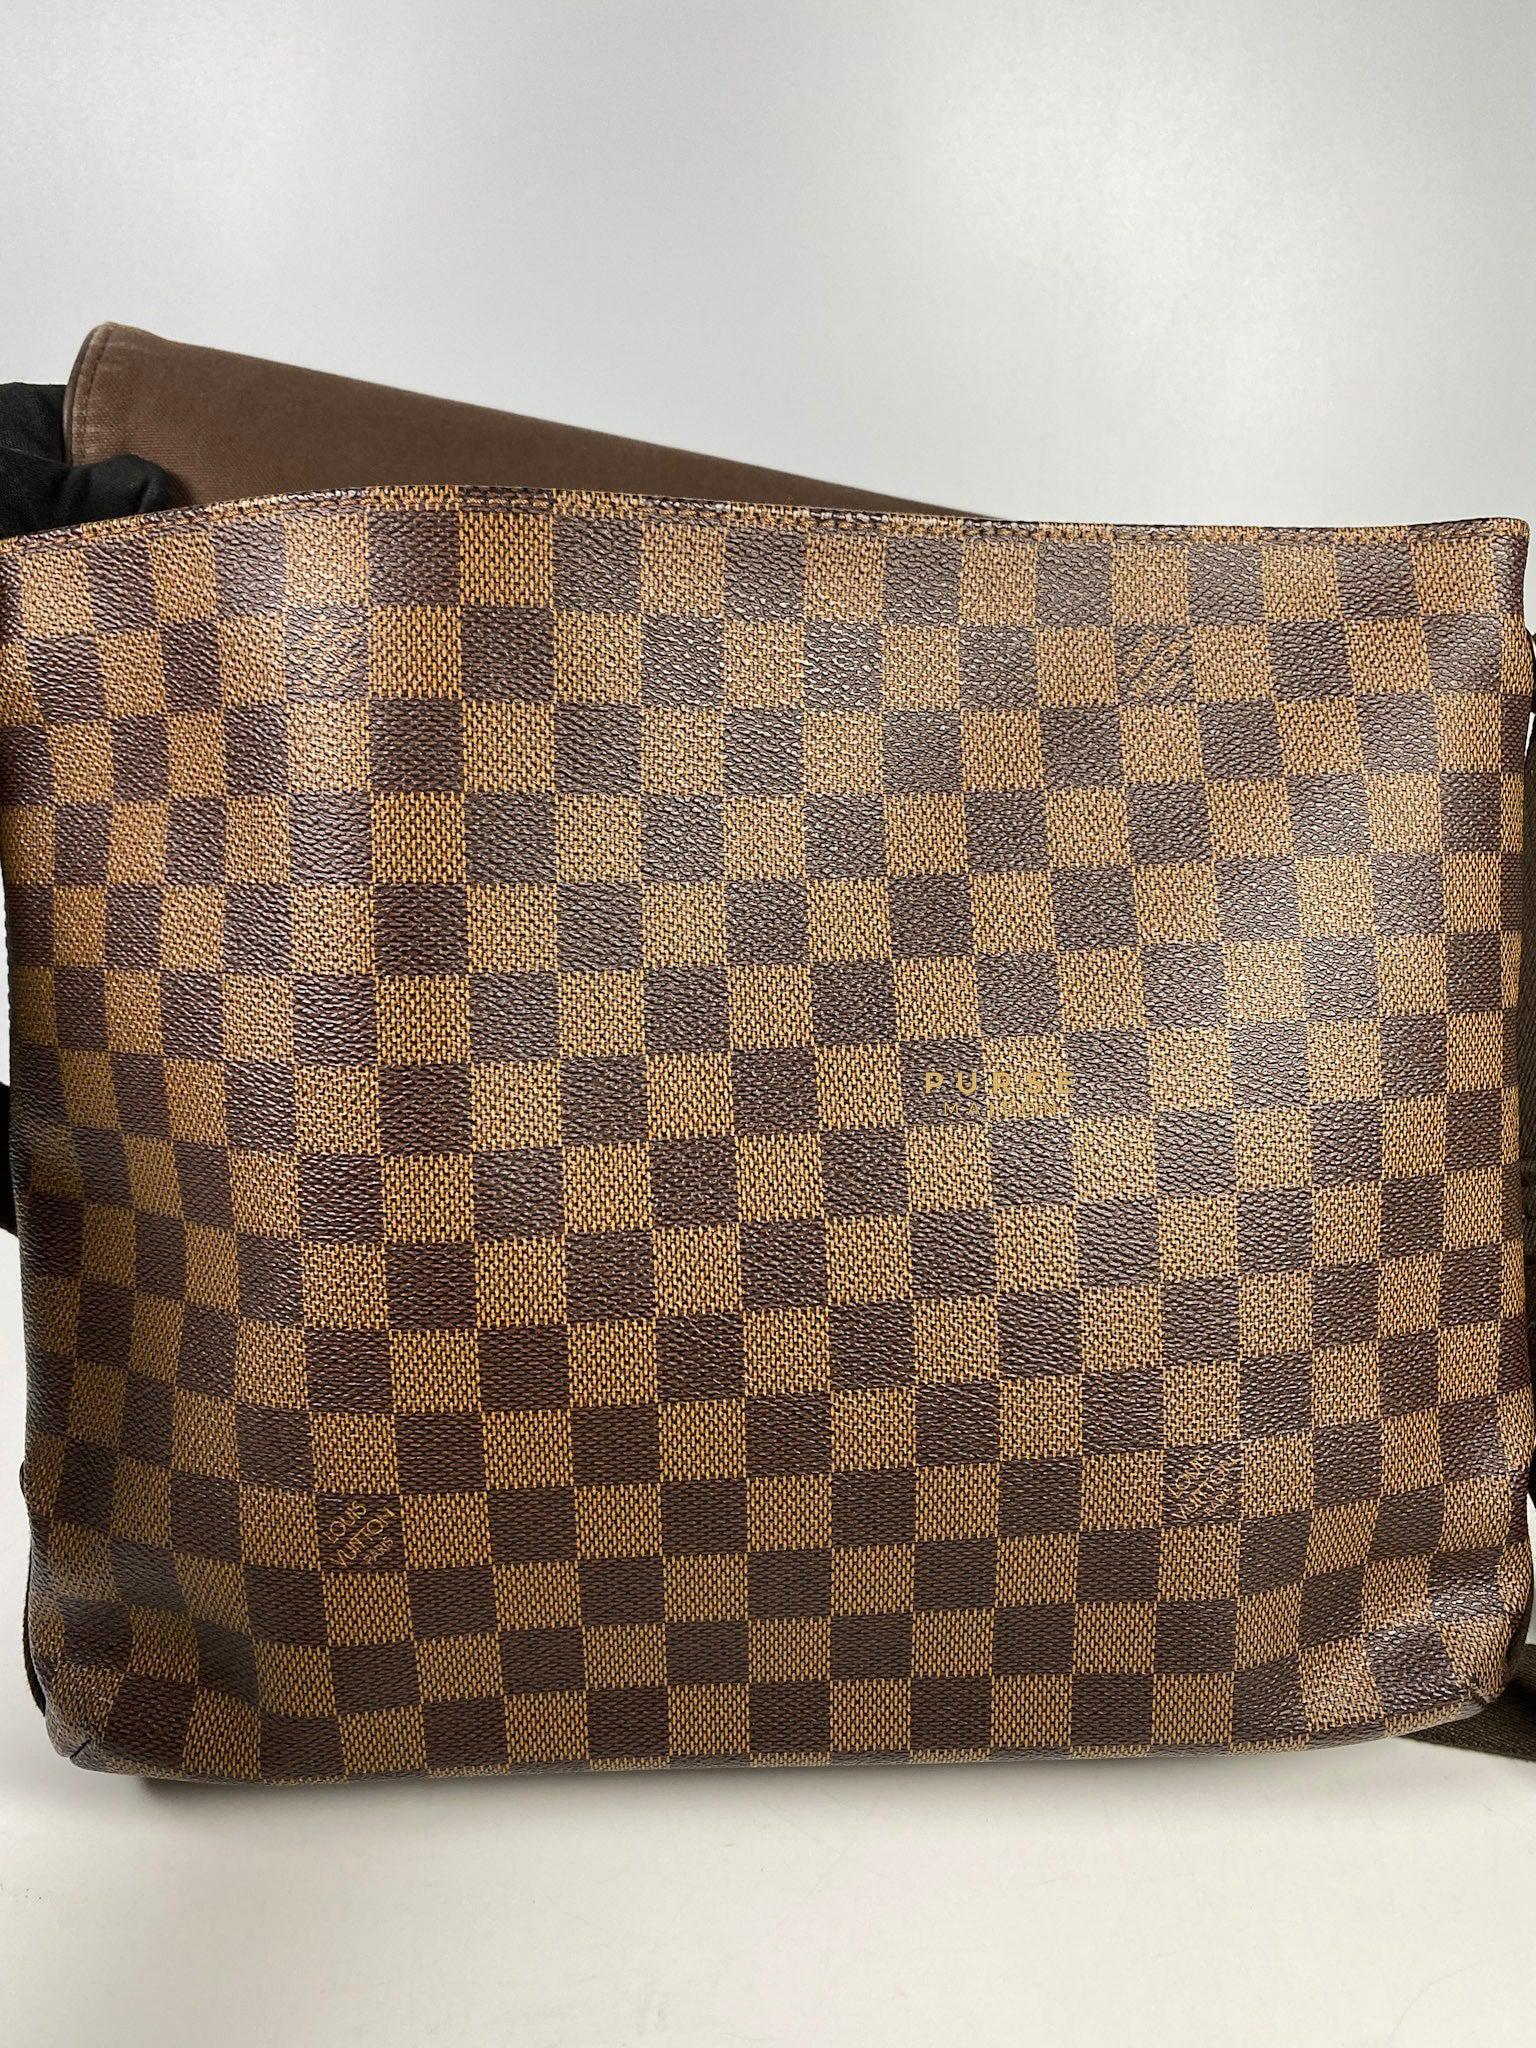 Louis Vuitton Brooklyn PM in Damier Ebene Canvas Messenger Bag (Date Code CA5110)